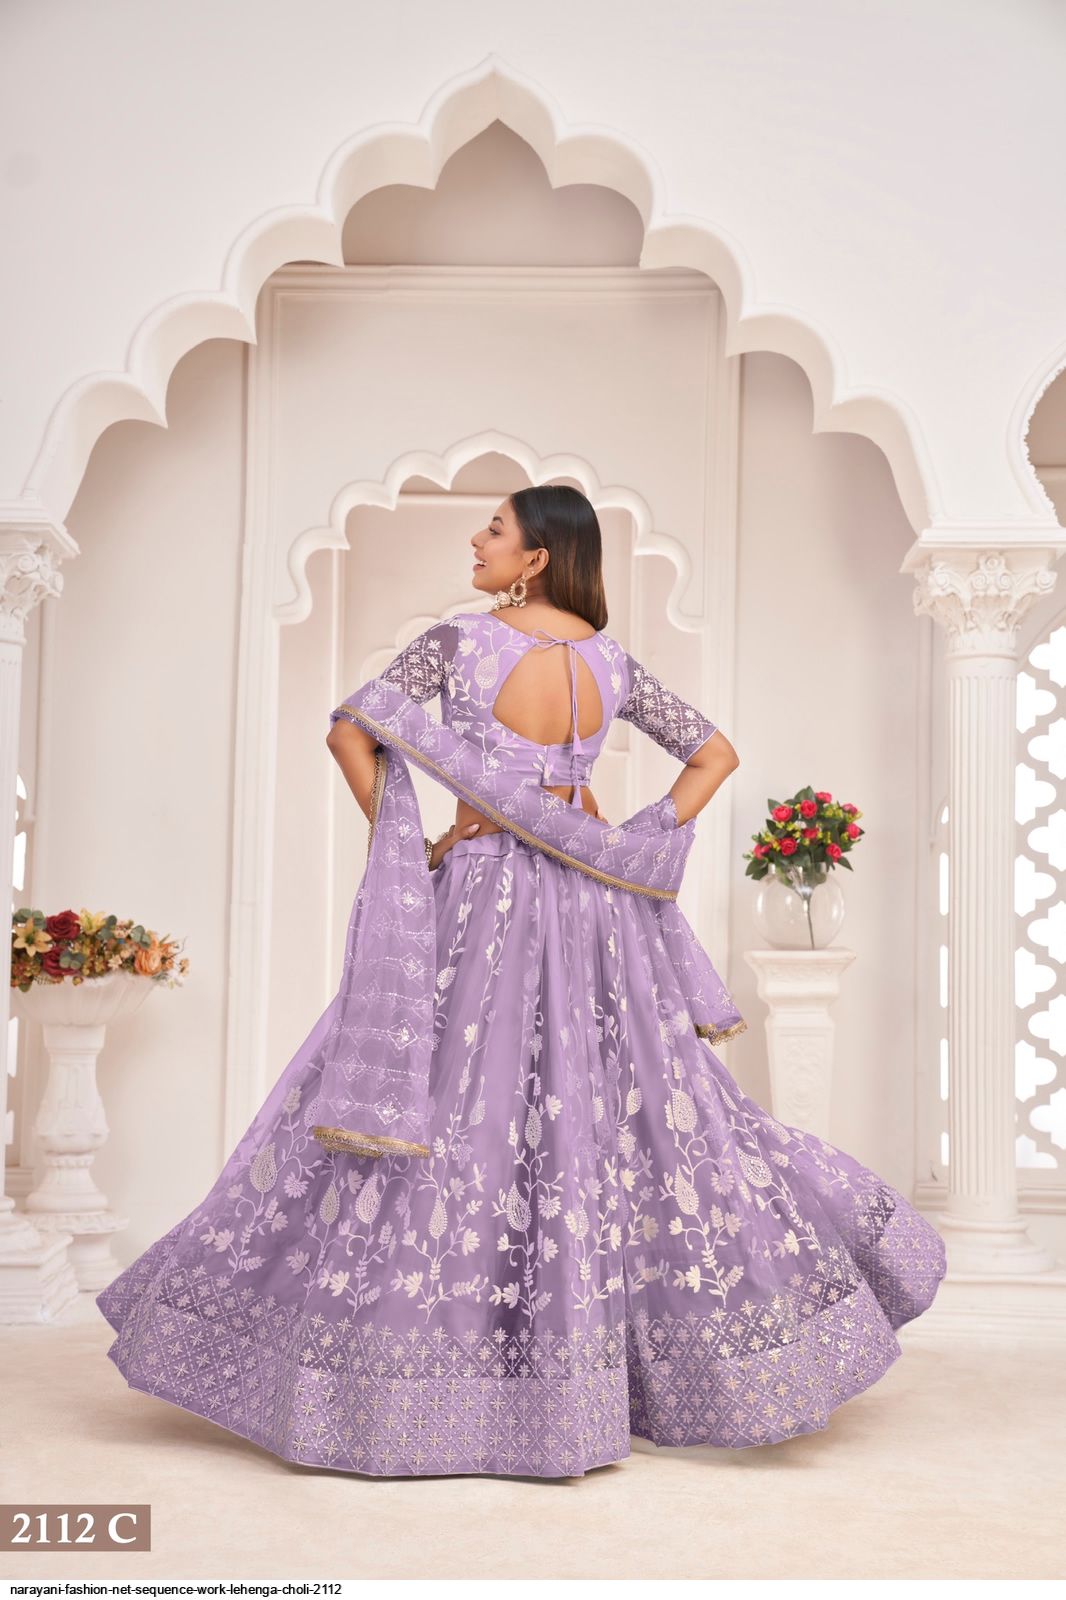 fcity.in - Krishna Fashion Purple Lehenga Choli / Tinkle Classy Kids Lehanga